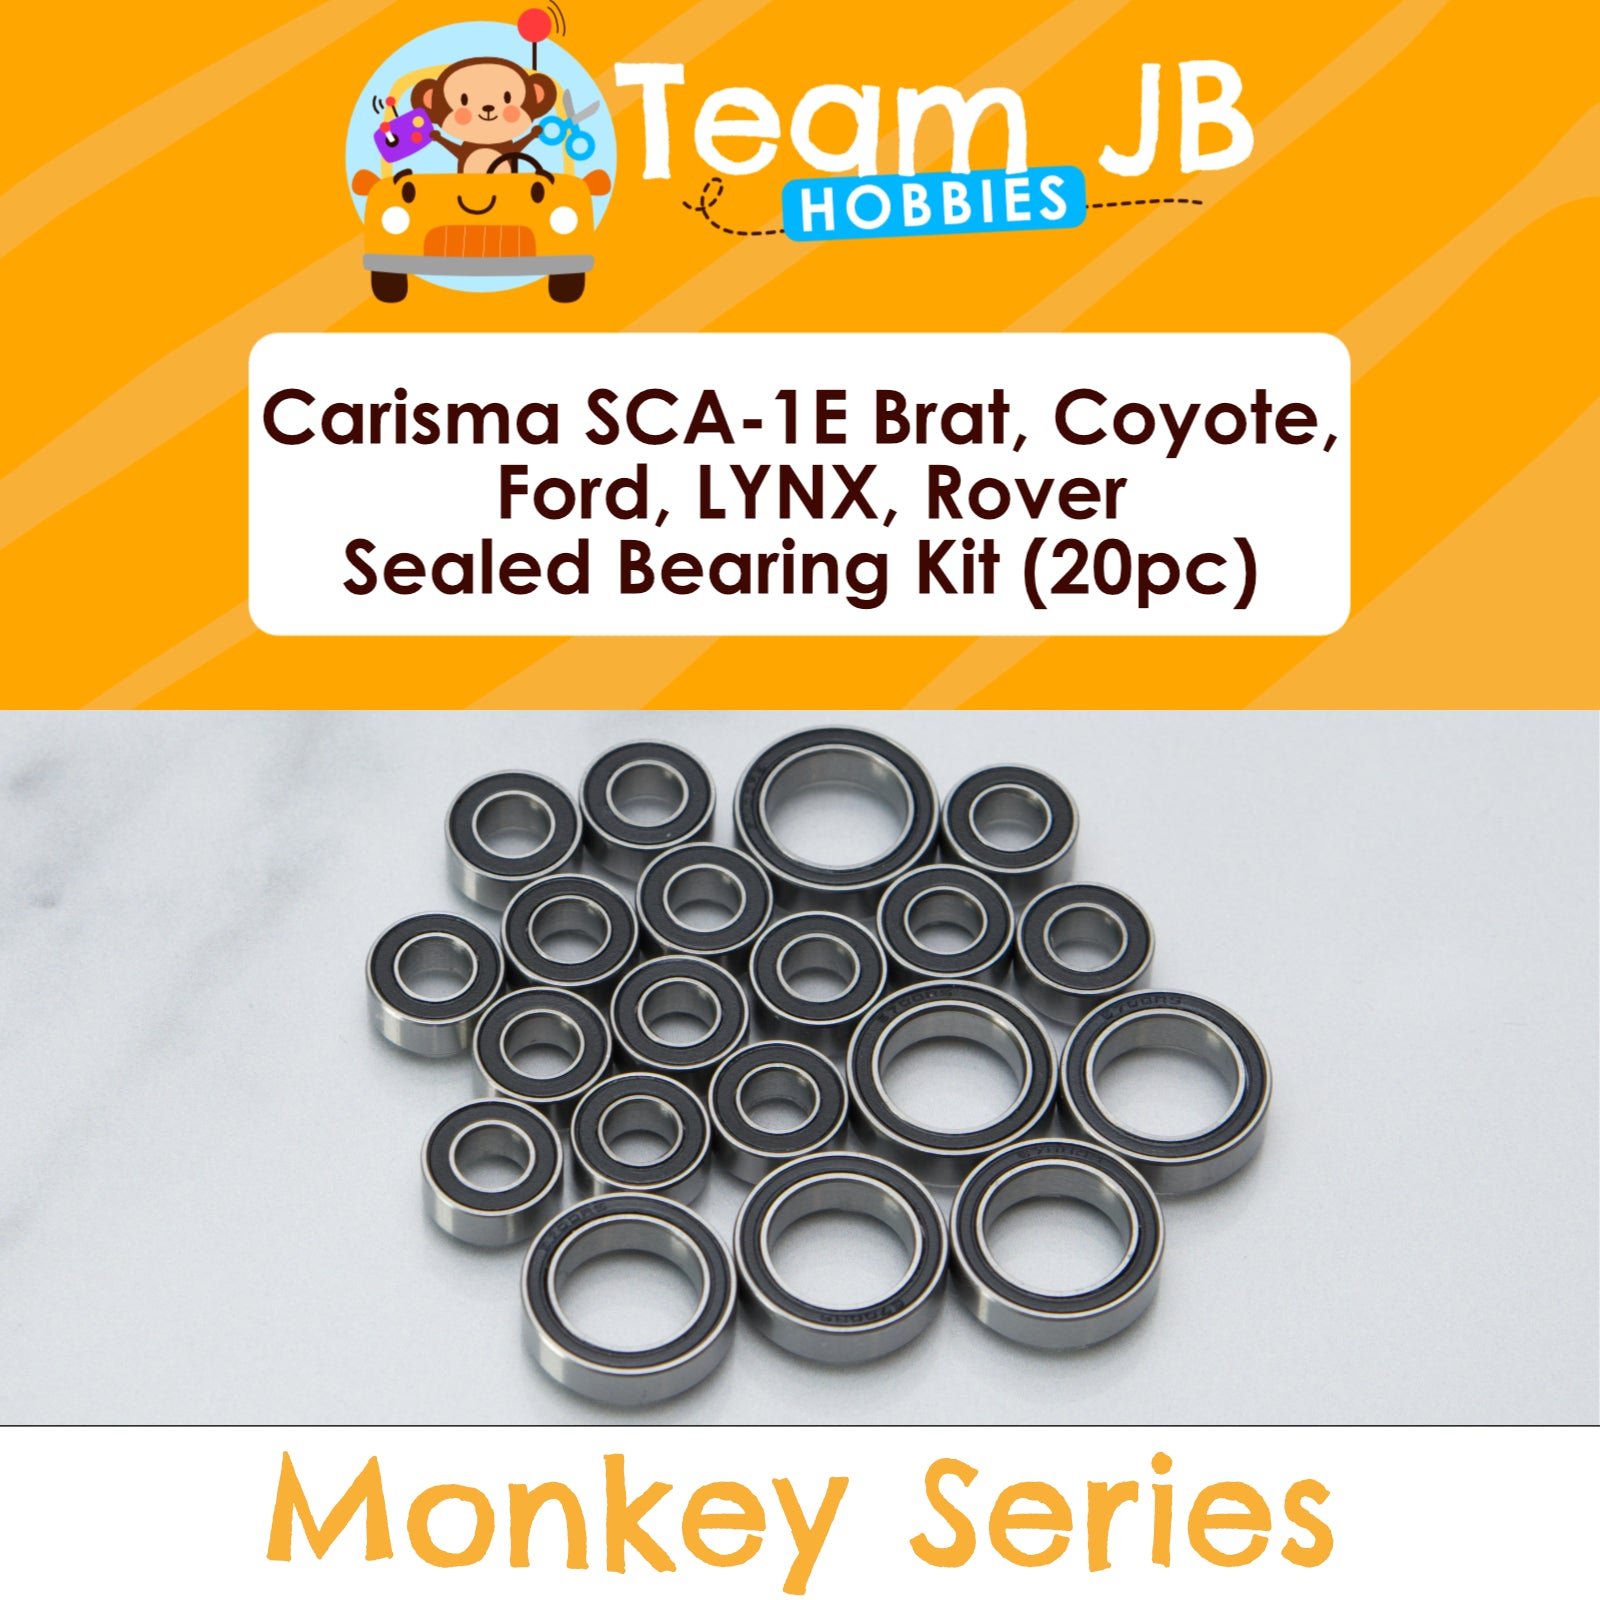 Carisma SCA-1E Brat, Coyote, Ford, LYNX, Rover - RTR/KIT - Sealed Bearing Kit